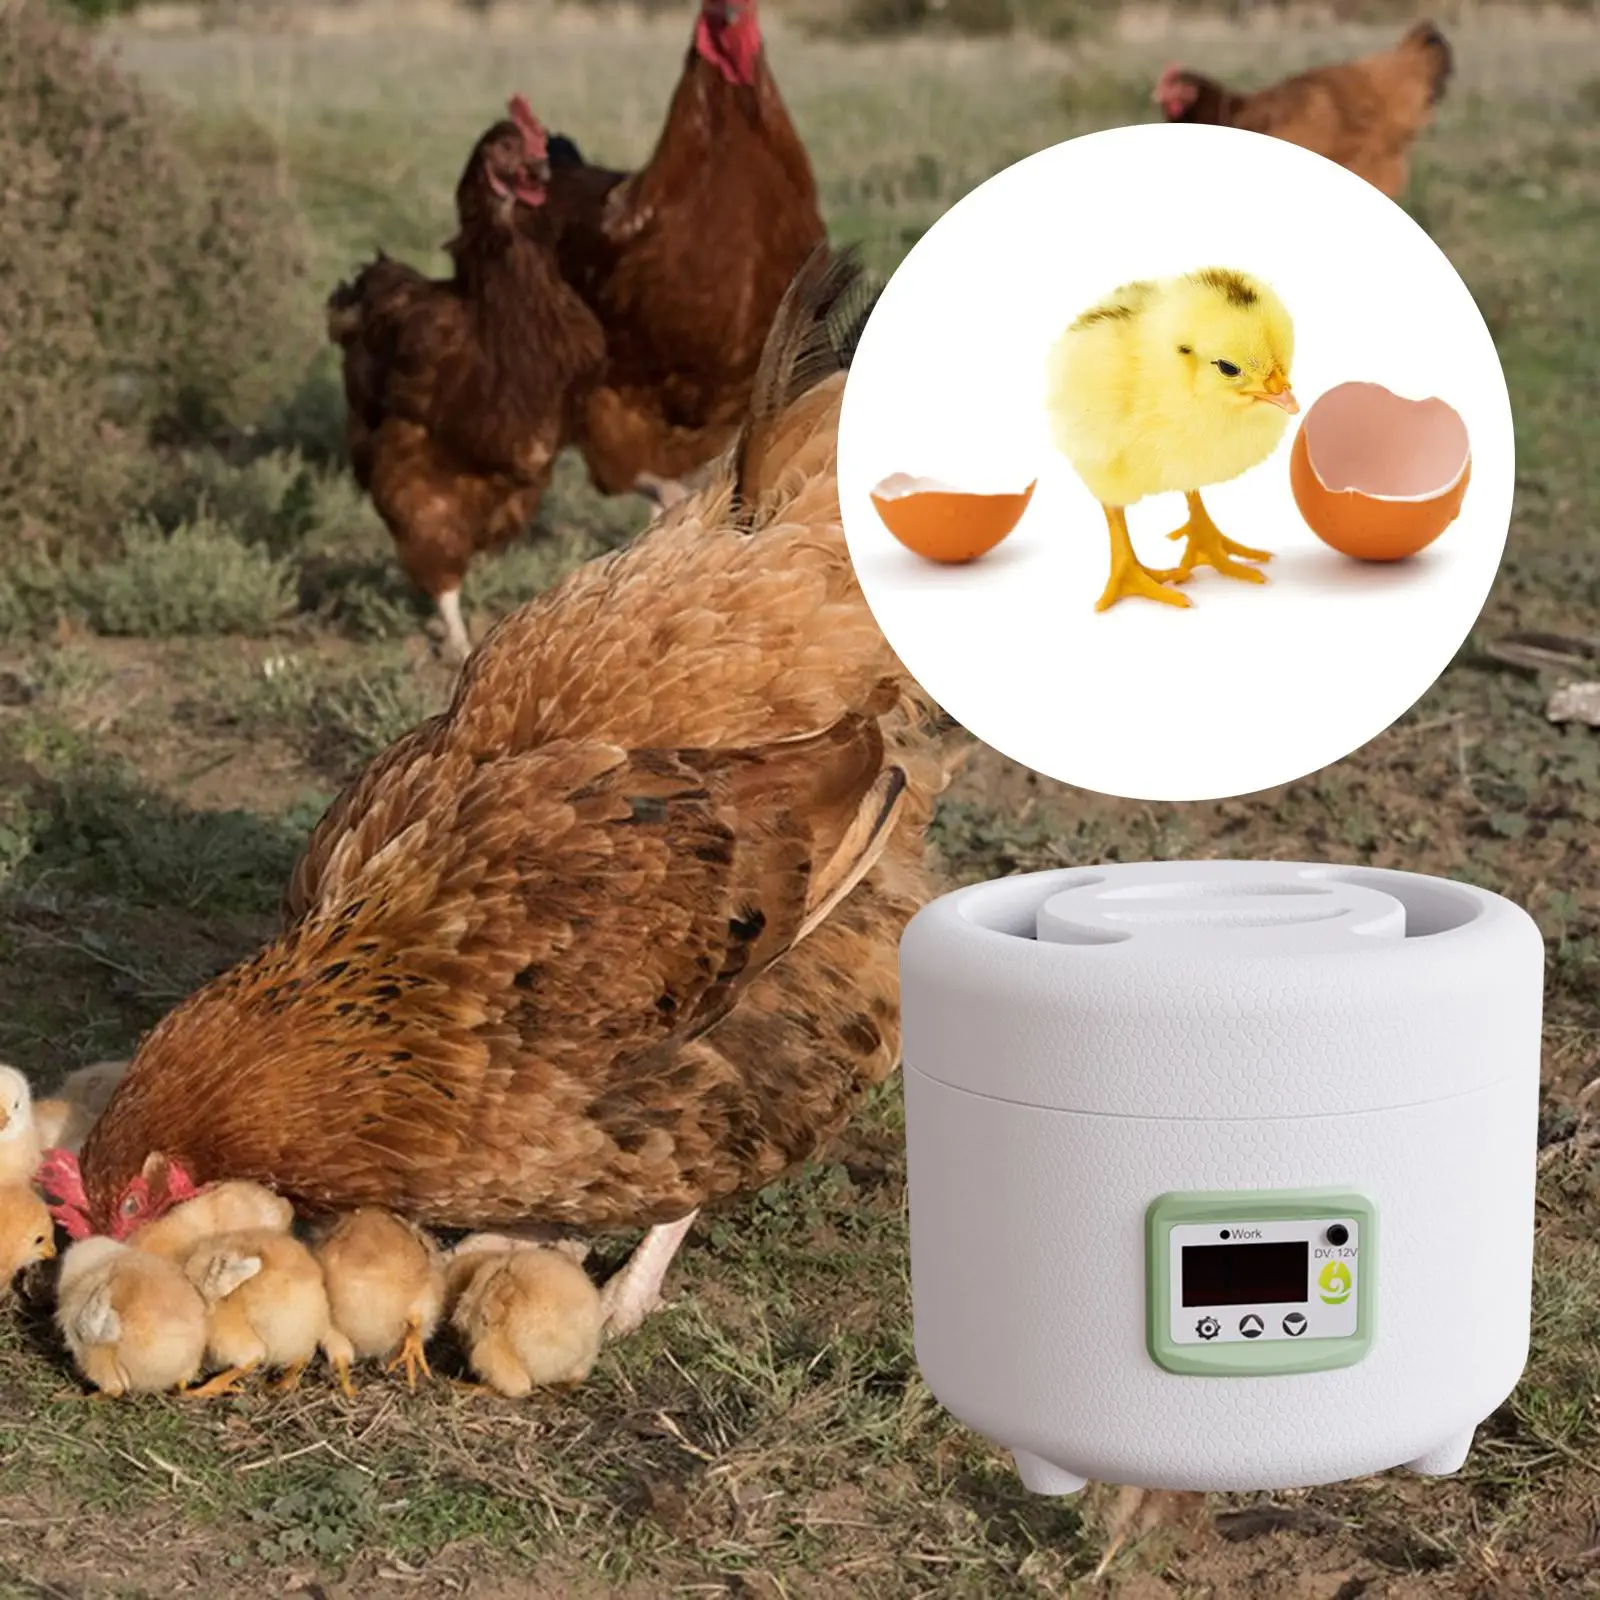 Small 9 Eggs Incubator Temperature Control Egg Hatcher for Duck Birds